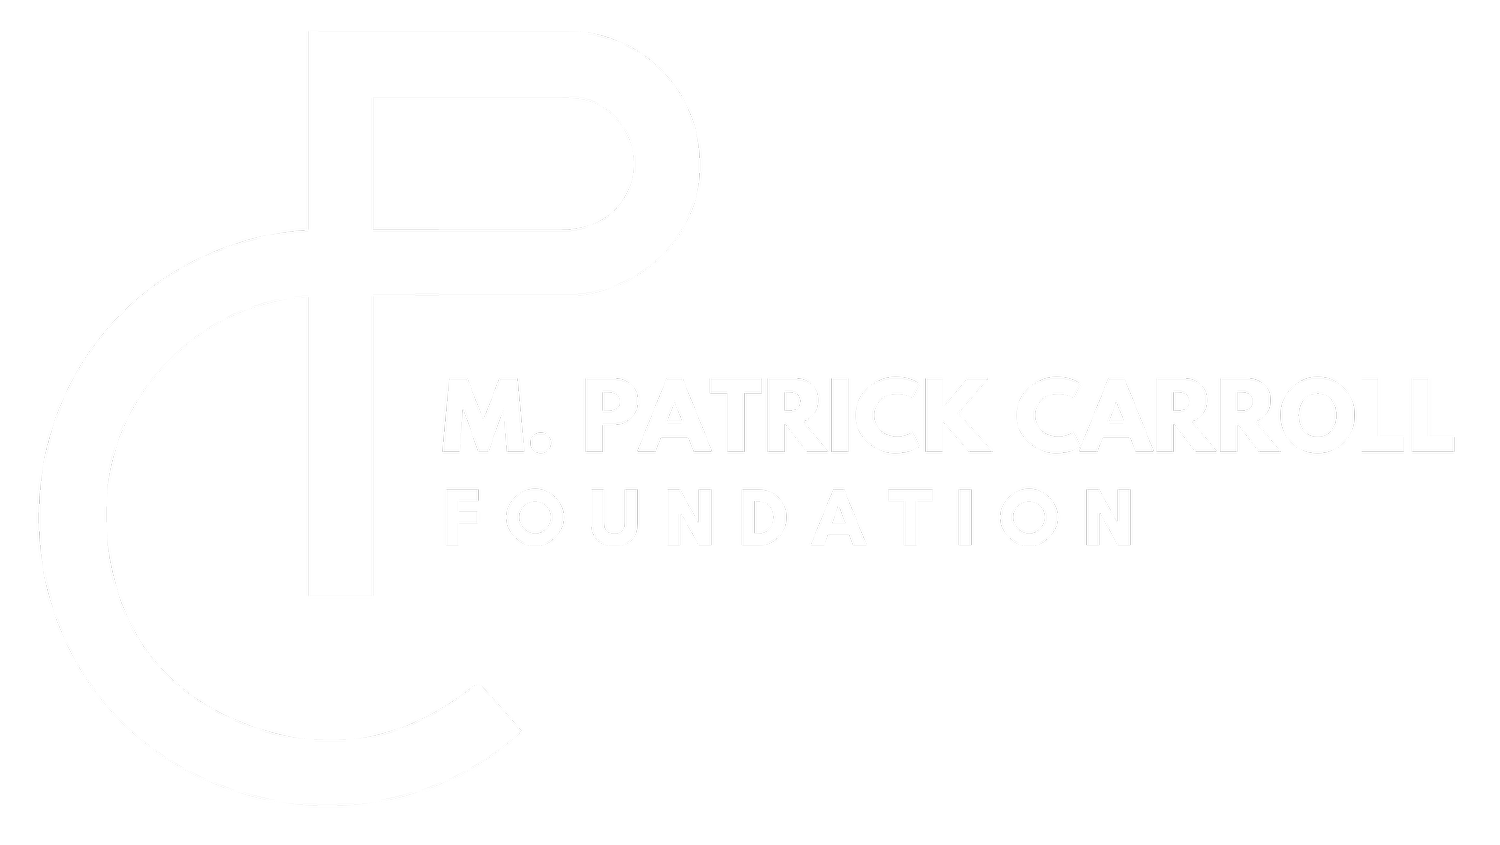 The M. Patrick Carroll Foundation